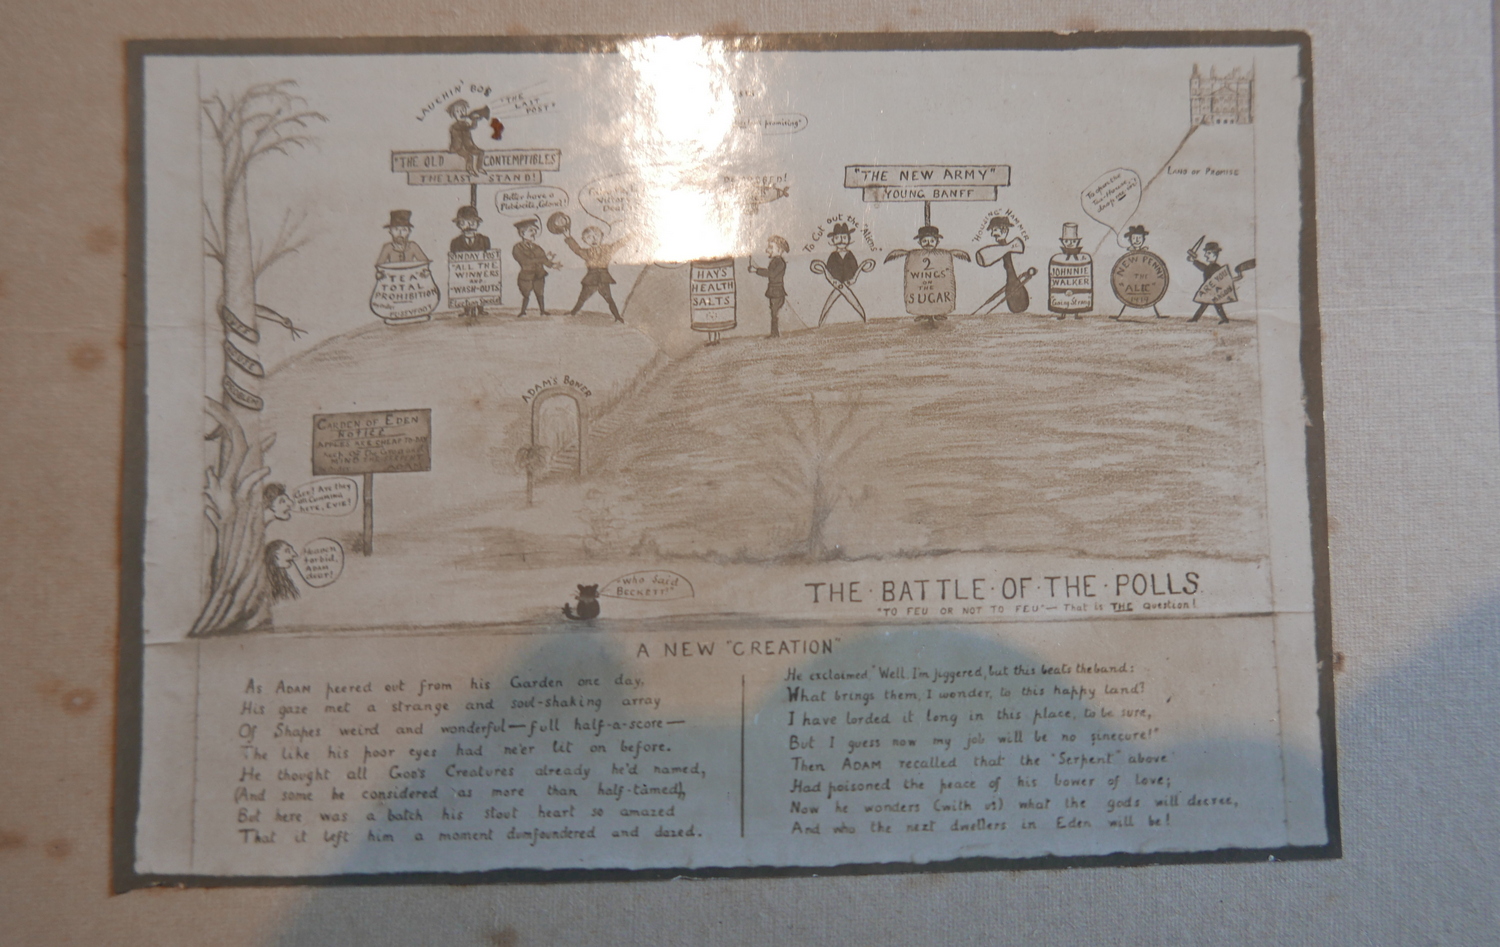 Antique c1900 Albumen Print Photo of The Battle of the Polls Religious Cartoon Banff-Scotland. - Image 2 of 6